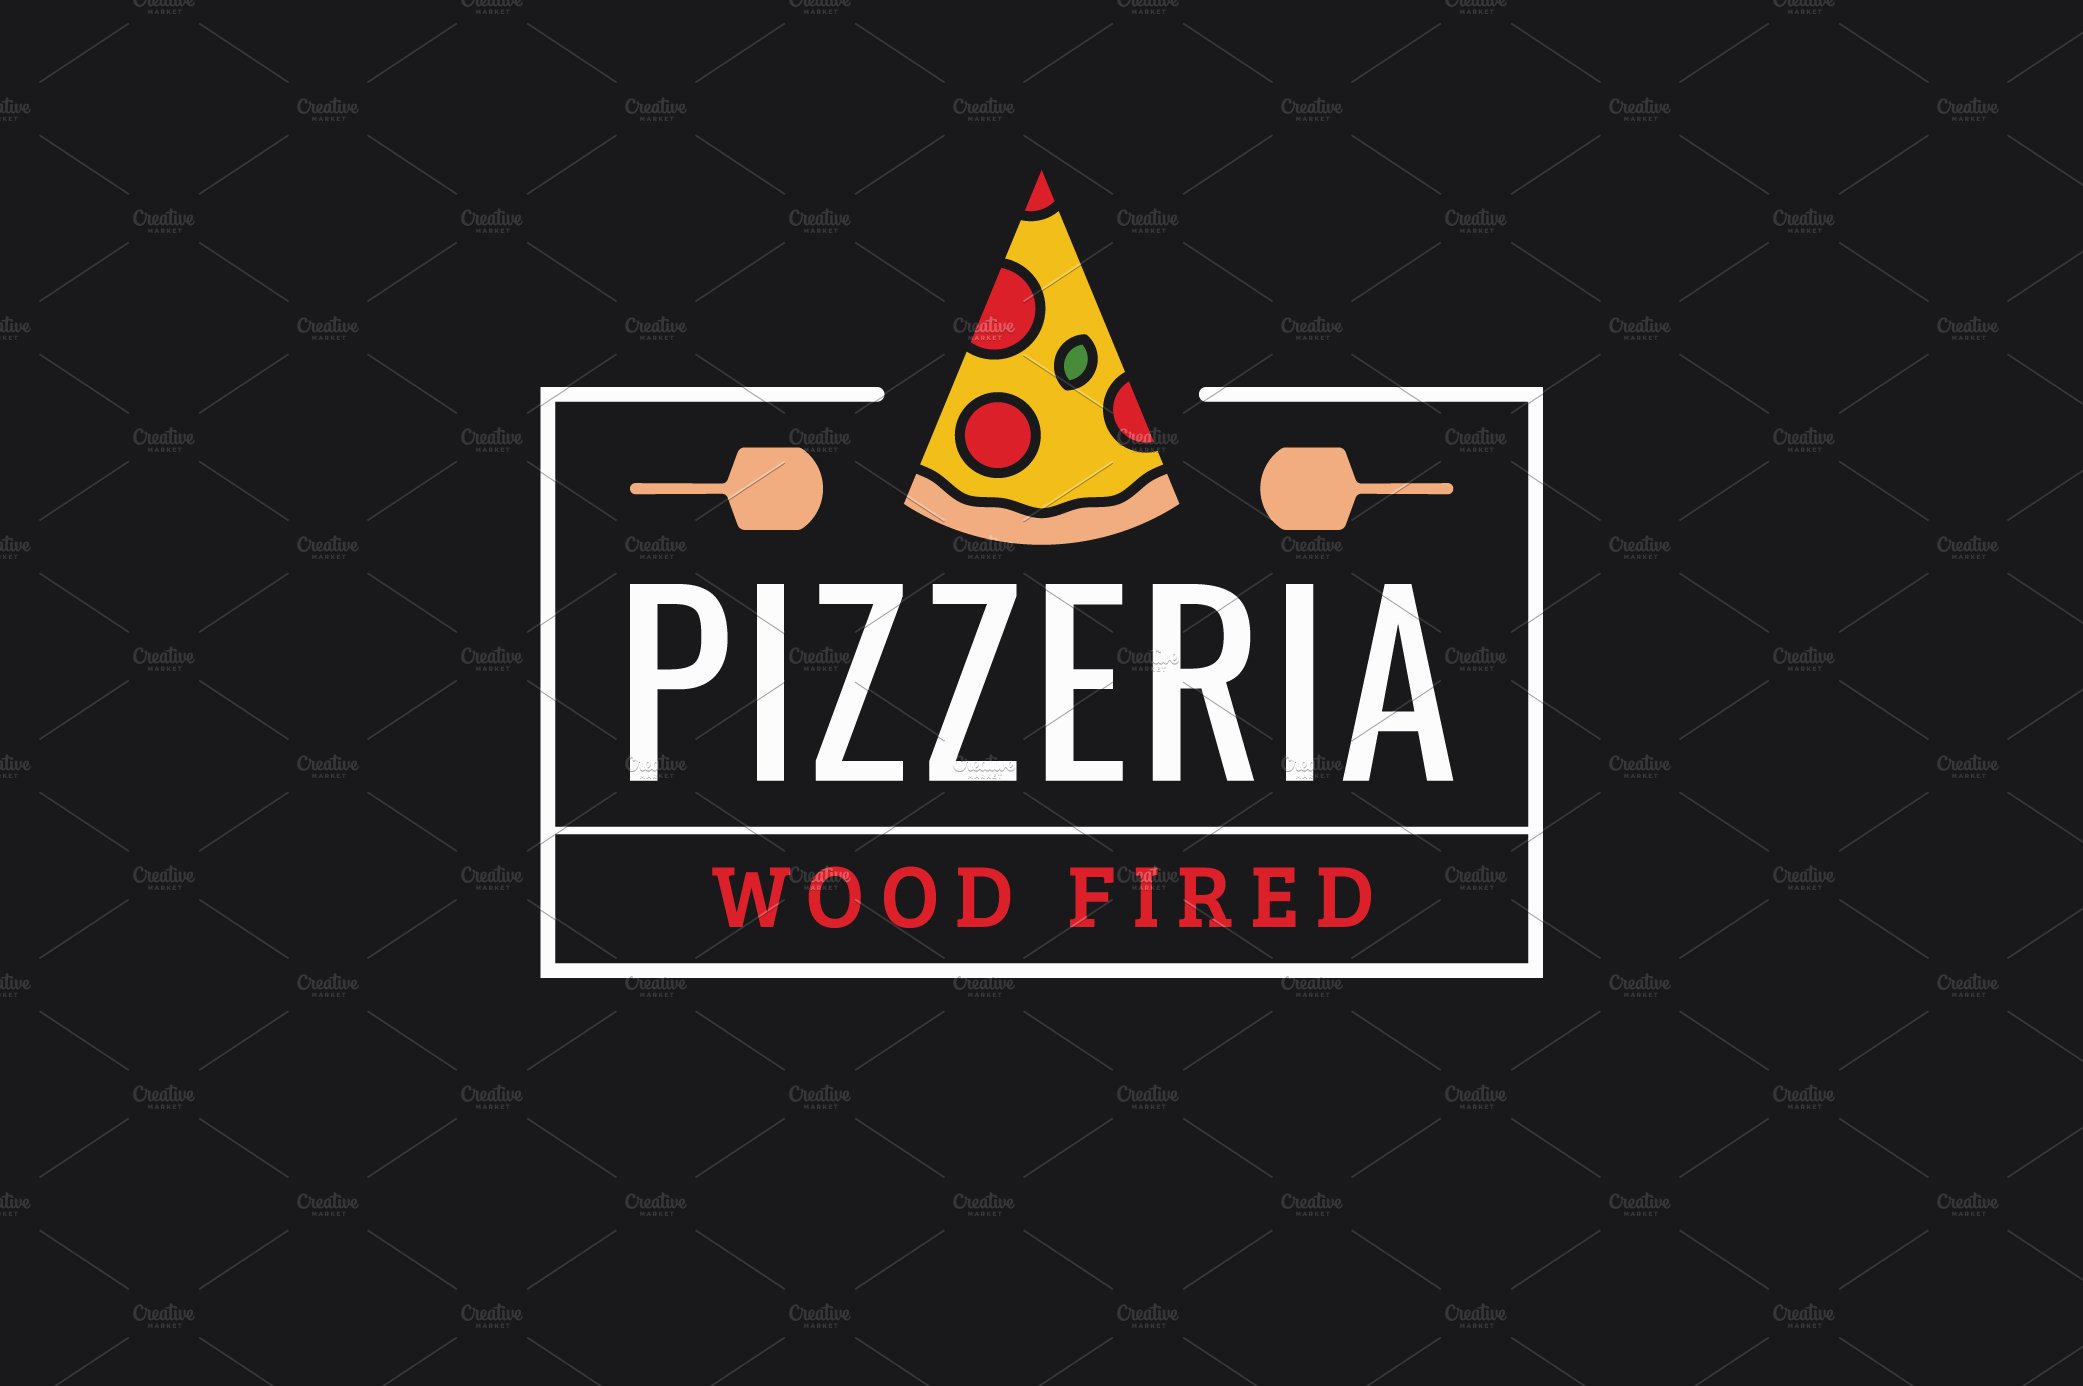 Pizzeria logo. Linear logo of pizza. cover image.